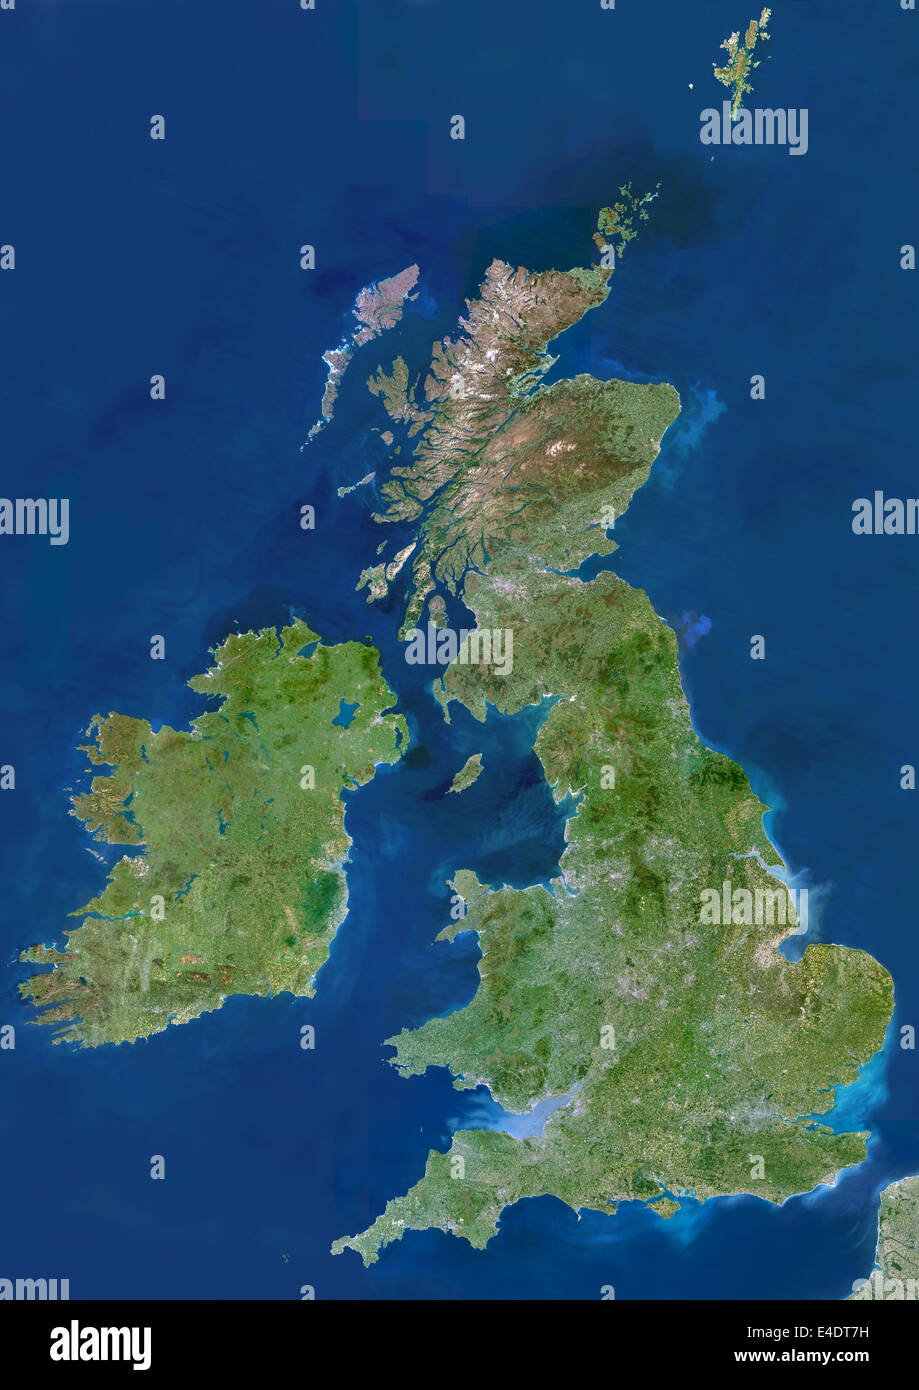 Islas Británicas, Imagen de satélite de color verdadero. Islas Británicas, imagen de satélite. La isla de Gran Bretaña abarca Inglaterra (centr Foto de stock